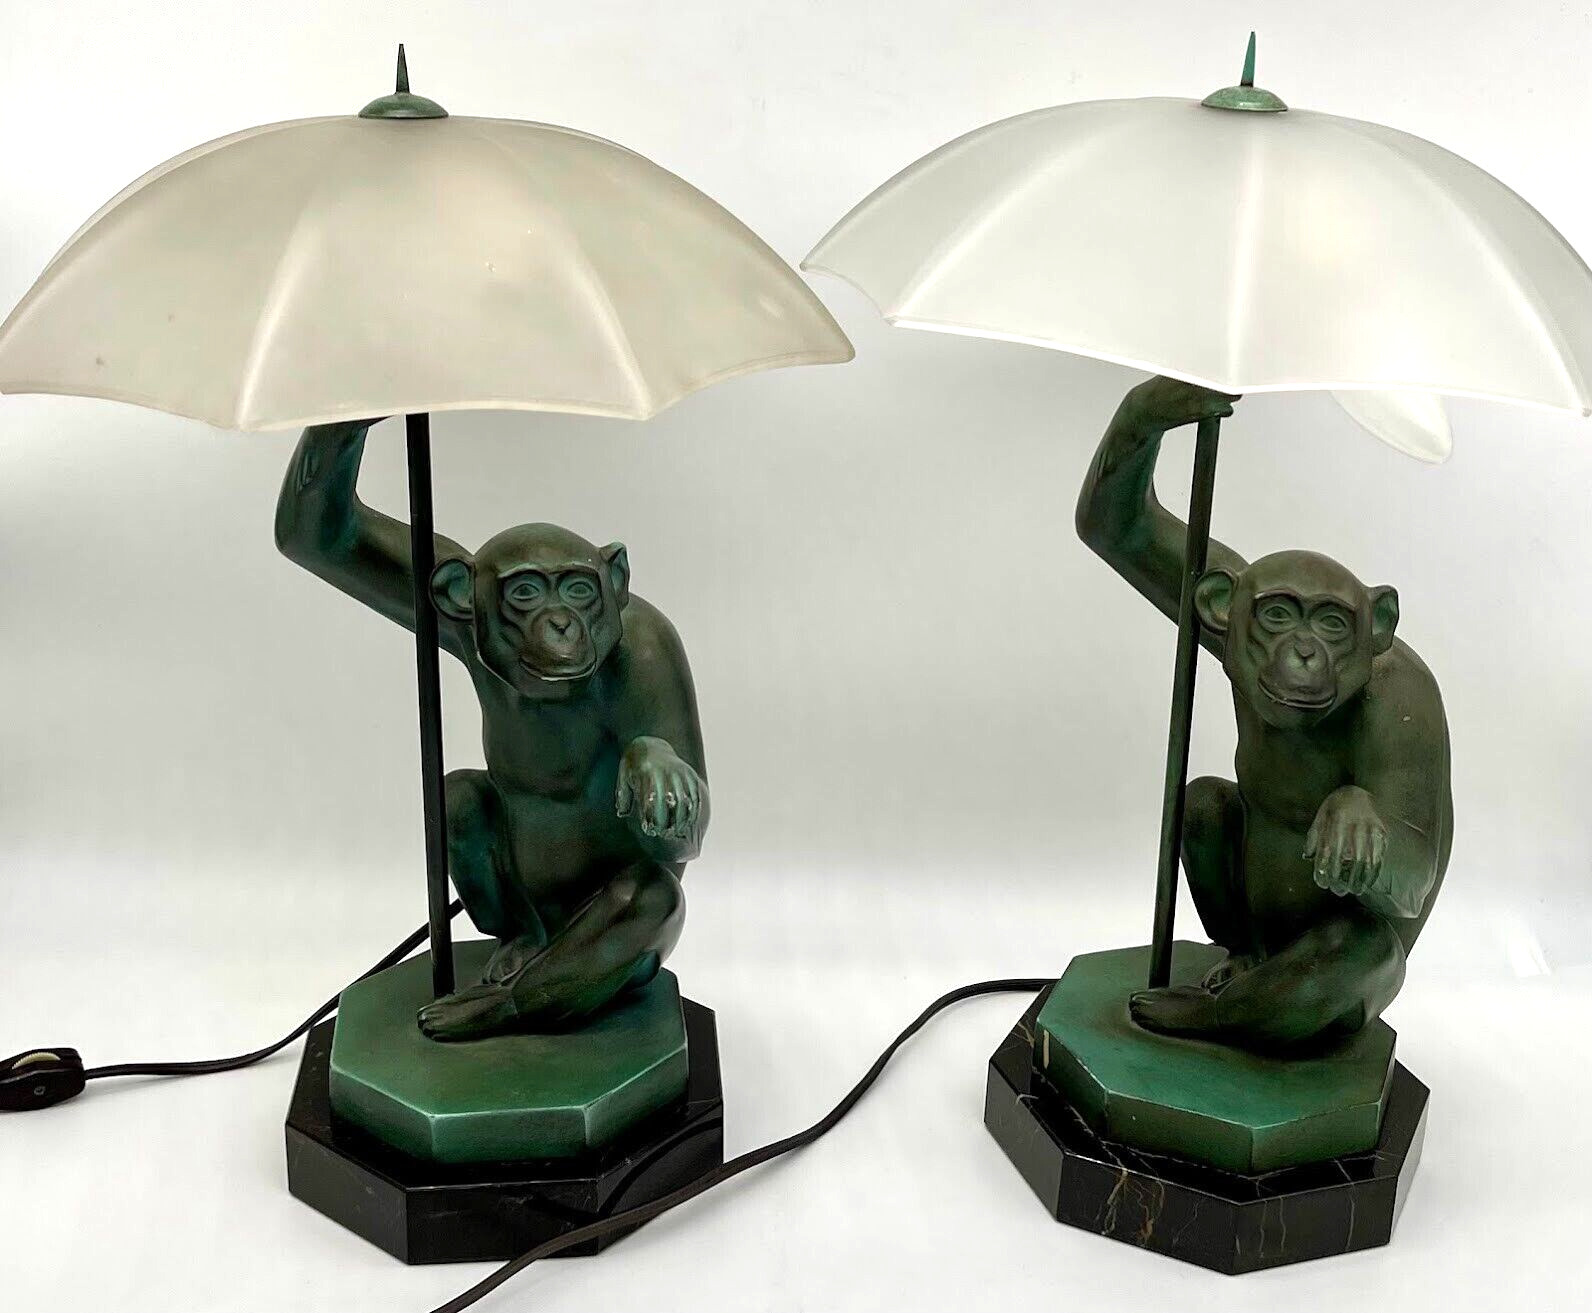 Pluie Monkey Umbrella French Lamps 1927 Max Le Verrier Art Deco patinated bronze